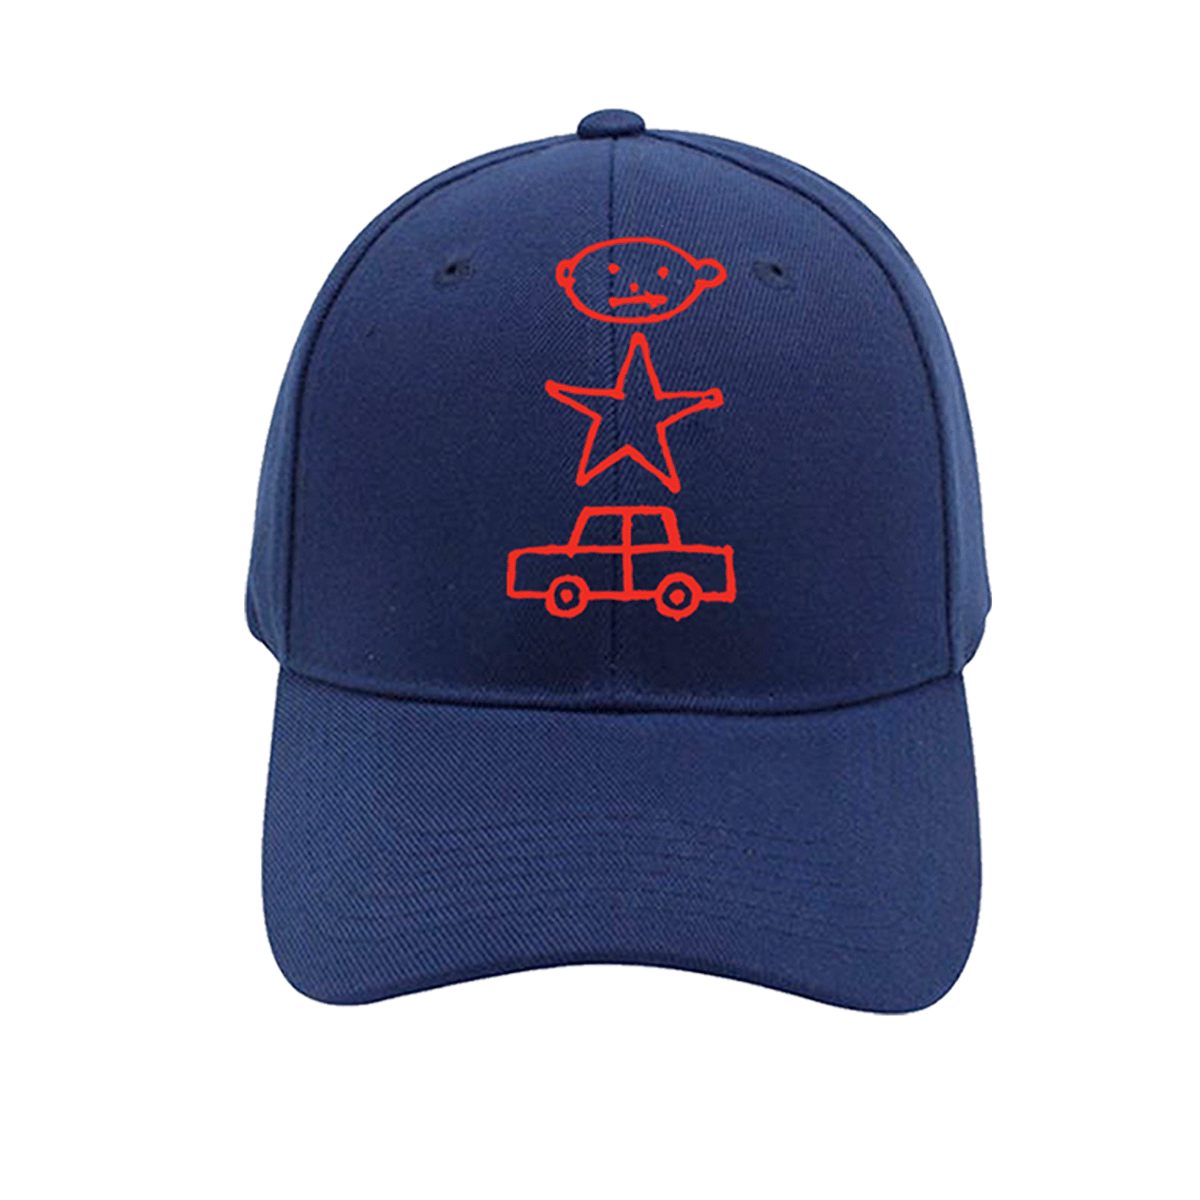 Achtung Baby Symbols Baseball Cap